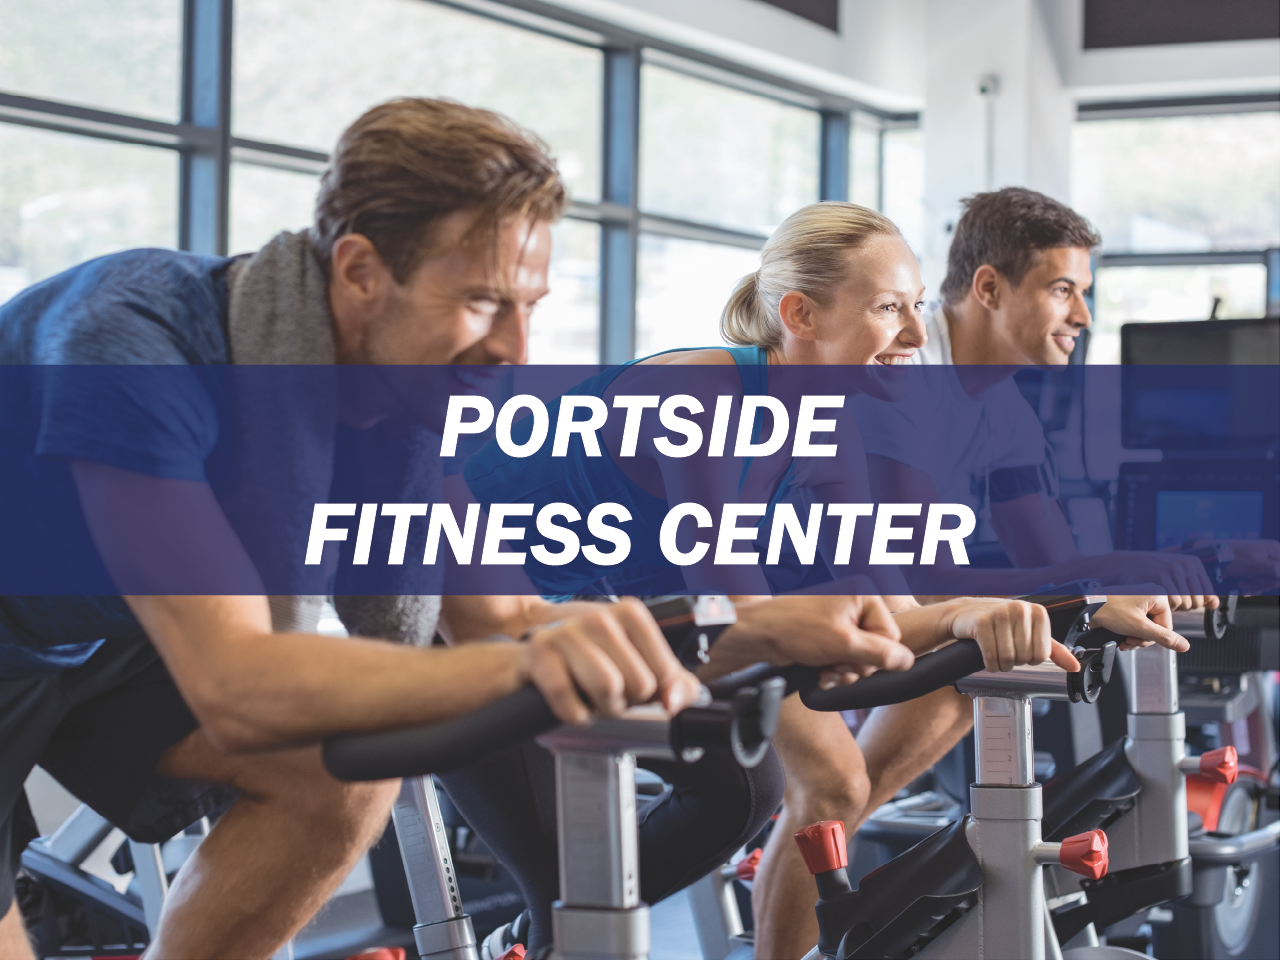 Portside Fitness Center Survey